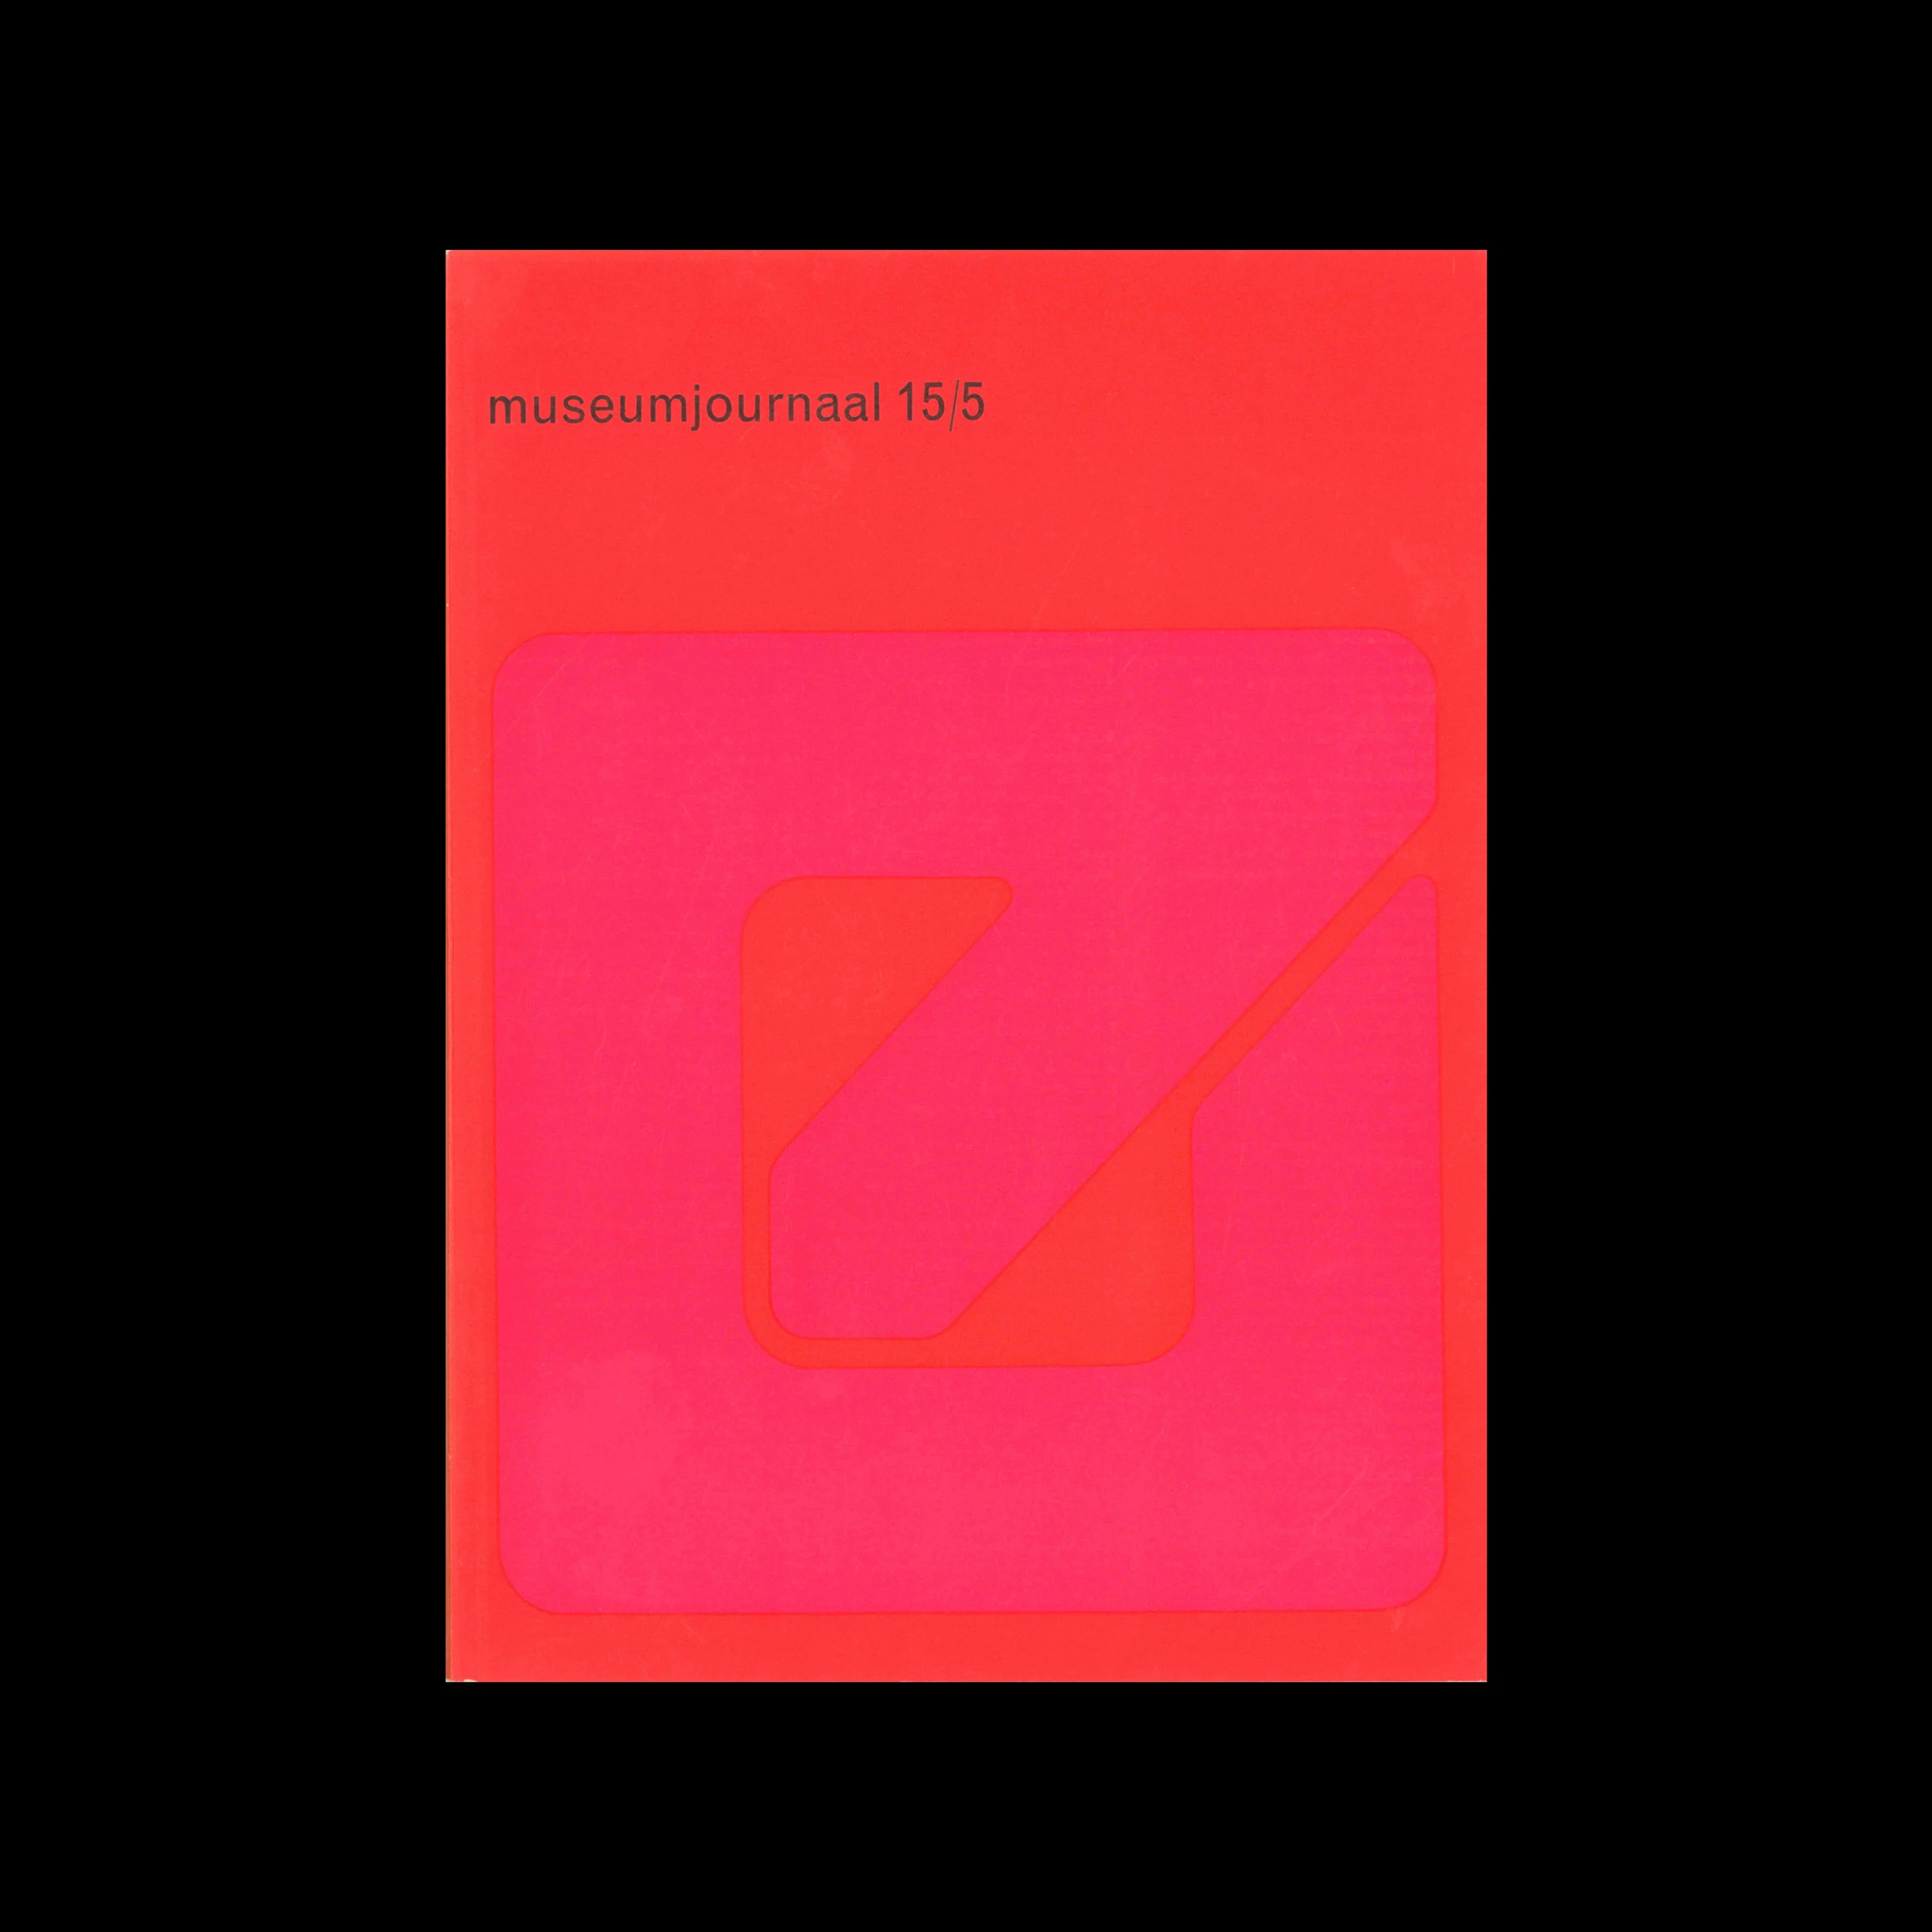 Museumjournaal, Serie 14 no5, 1970. Design by Jurriaan Schrofer